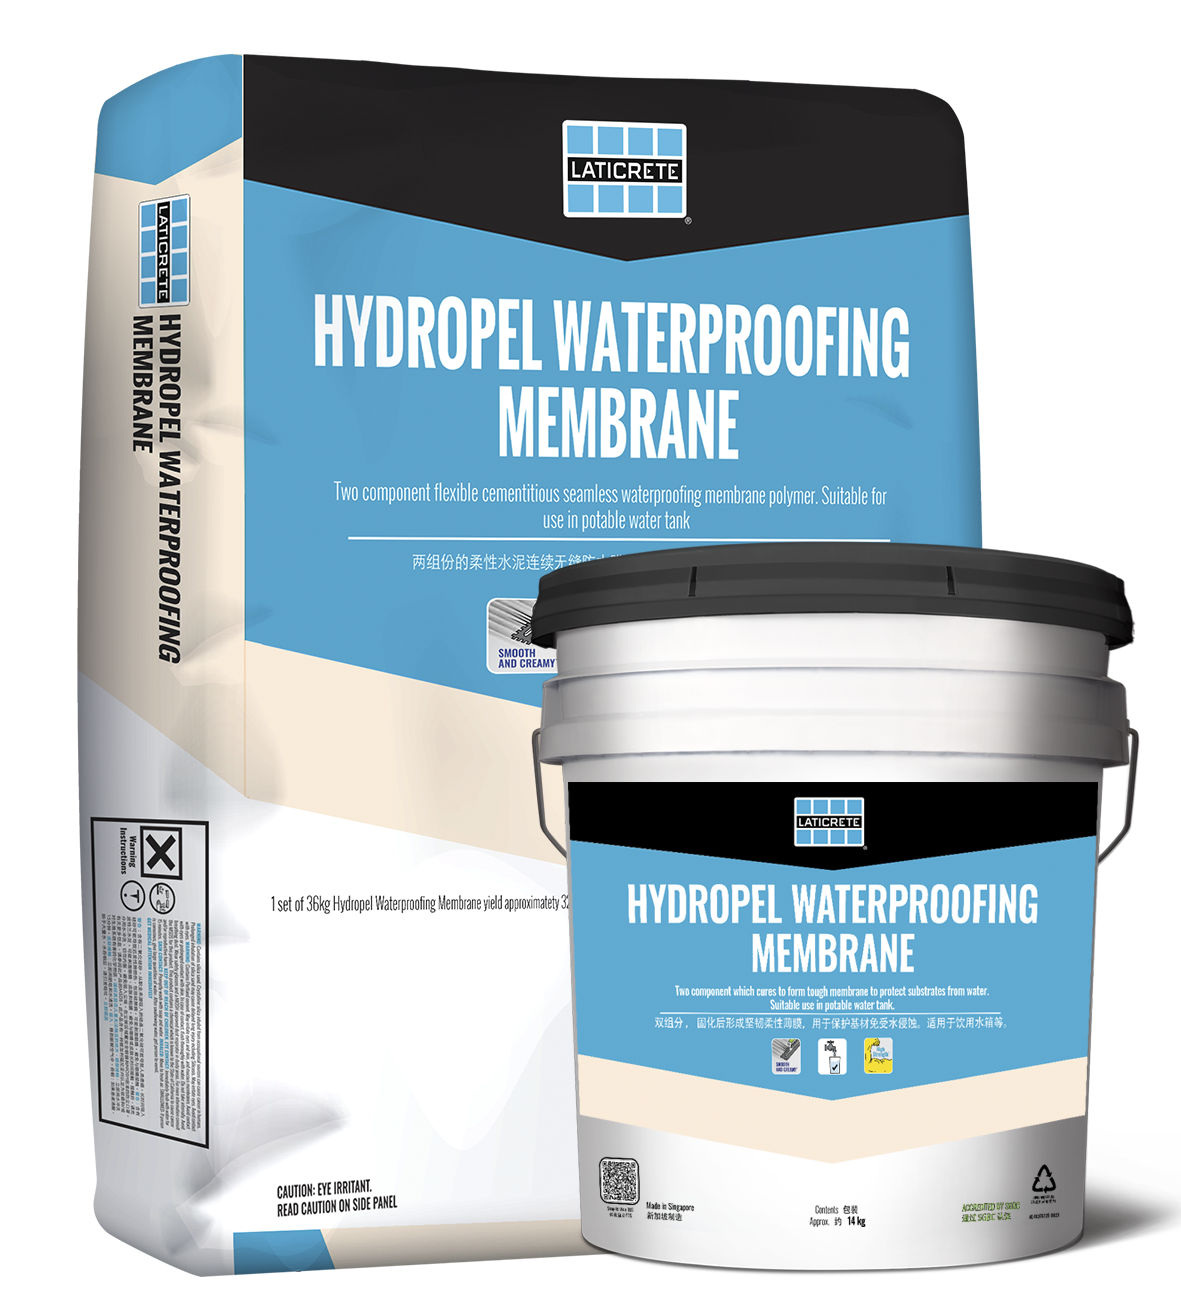 Hydropel Waterproofing Membrane